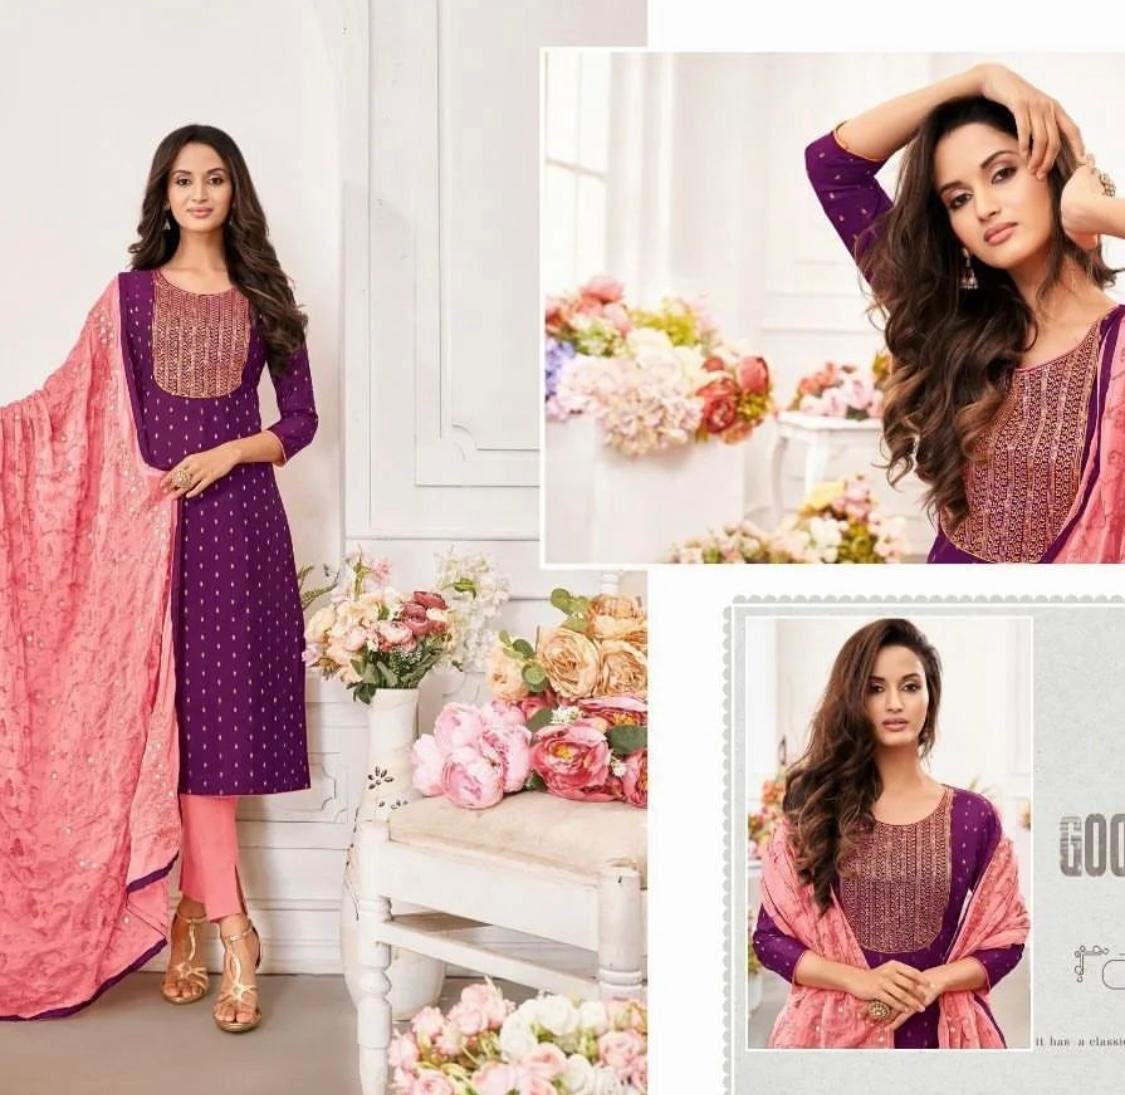 Pink Colour Dress | Indian | Combination | Pakistani | Design | Wedding |  Patterns | For Girls pink | Gaun pakistan, Gaun merah muda